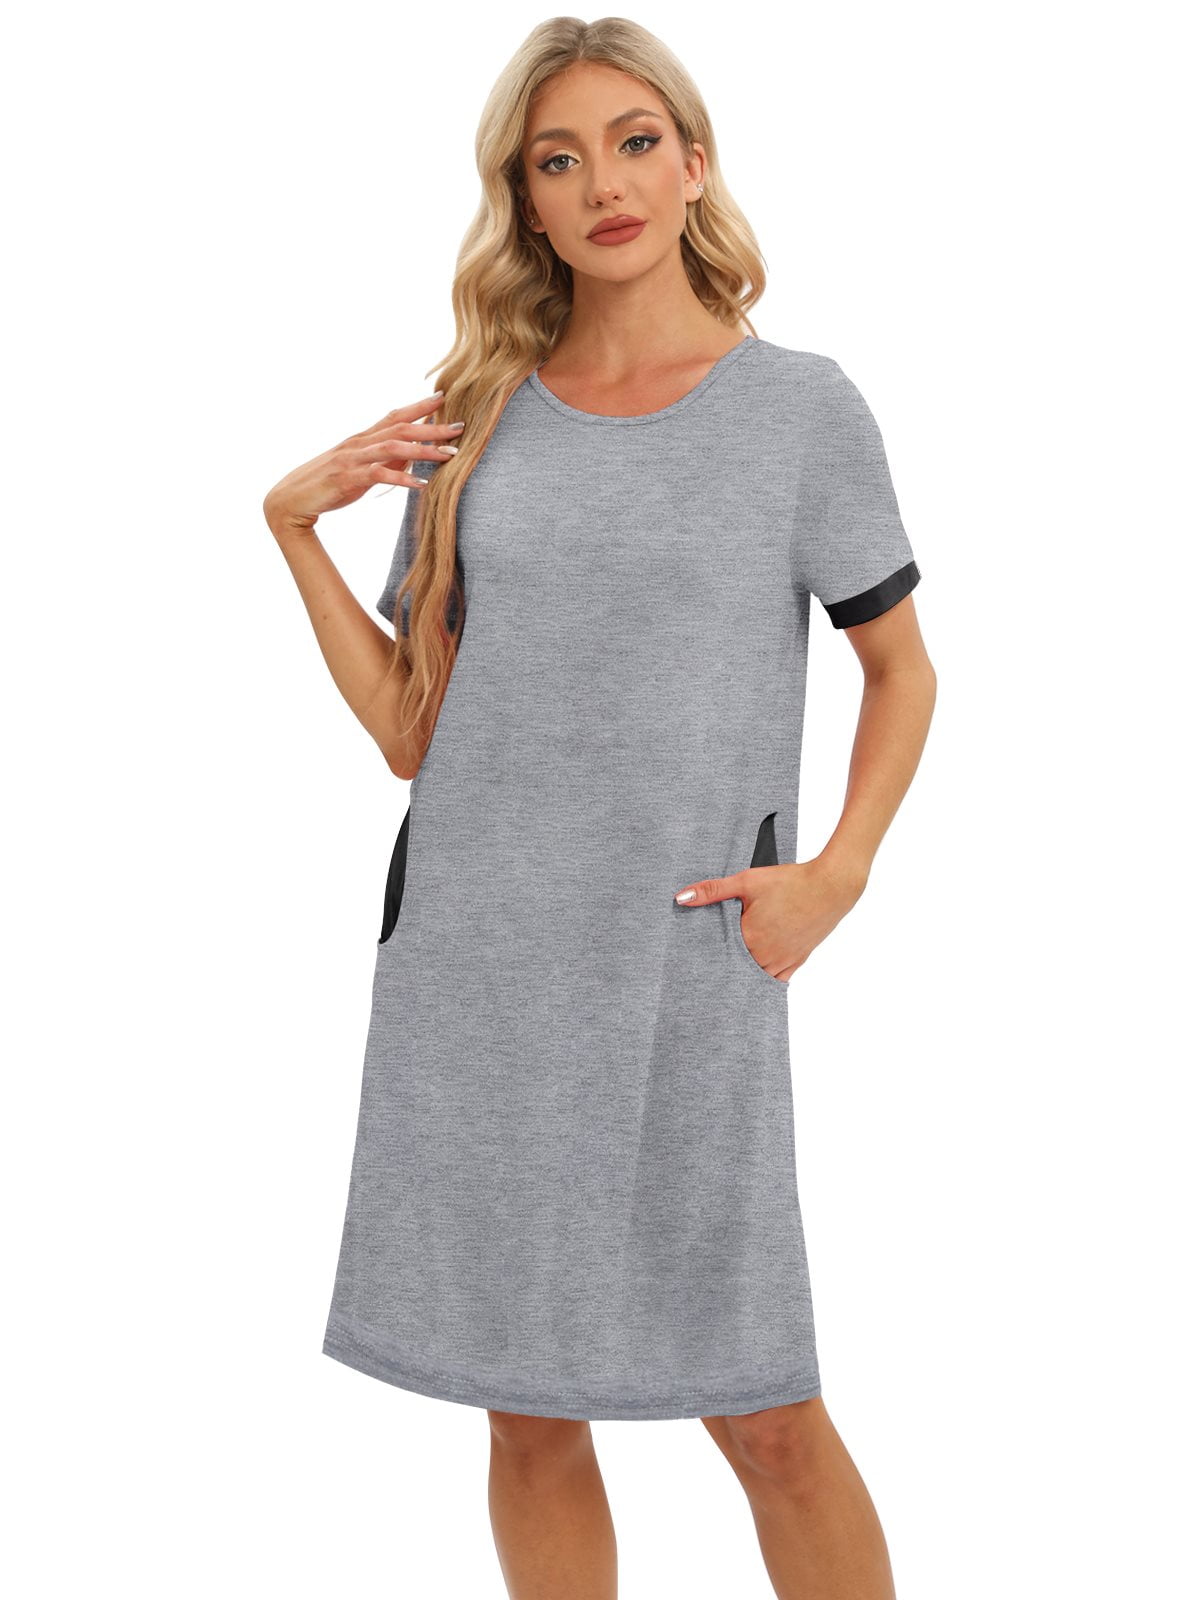 EFINNY Women's Short Sleeves Nightgowns Stitching Contrast Nightshirt ...